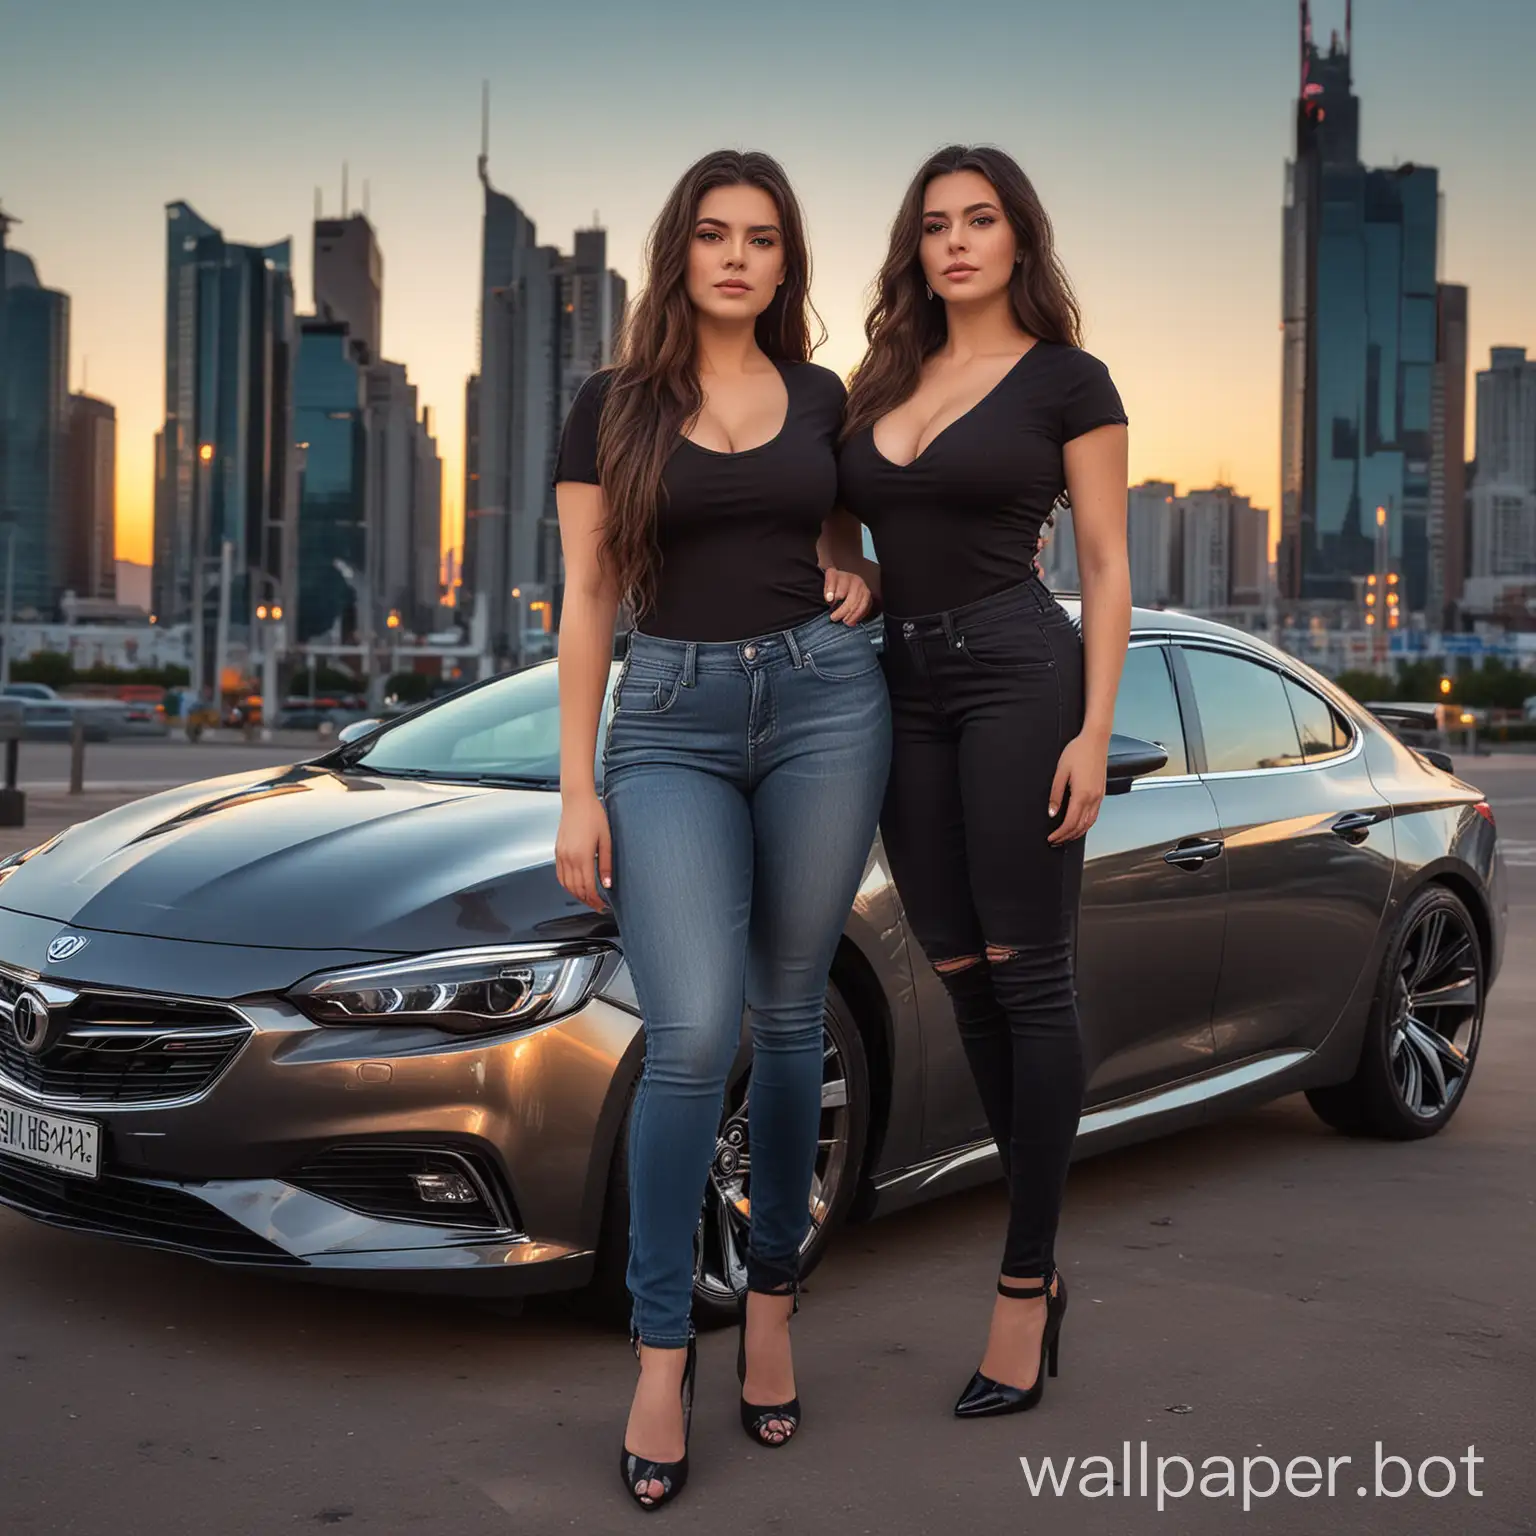 Futuristic-Sunset-City-Scene-with-Woman-and-Opel-Insignia-GrandSport